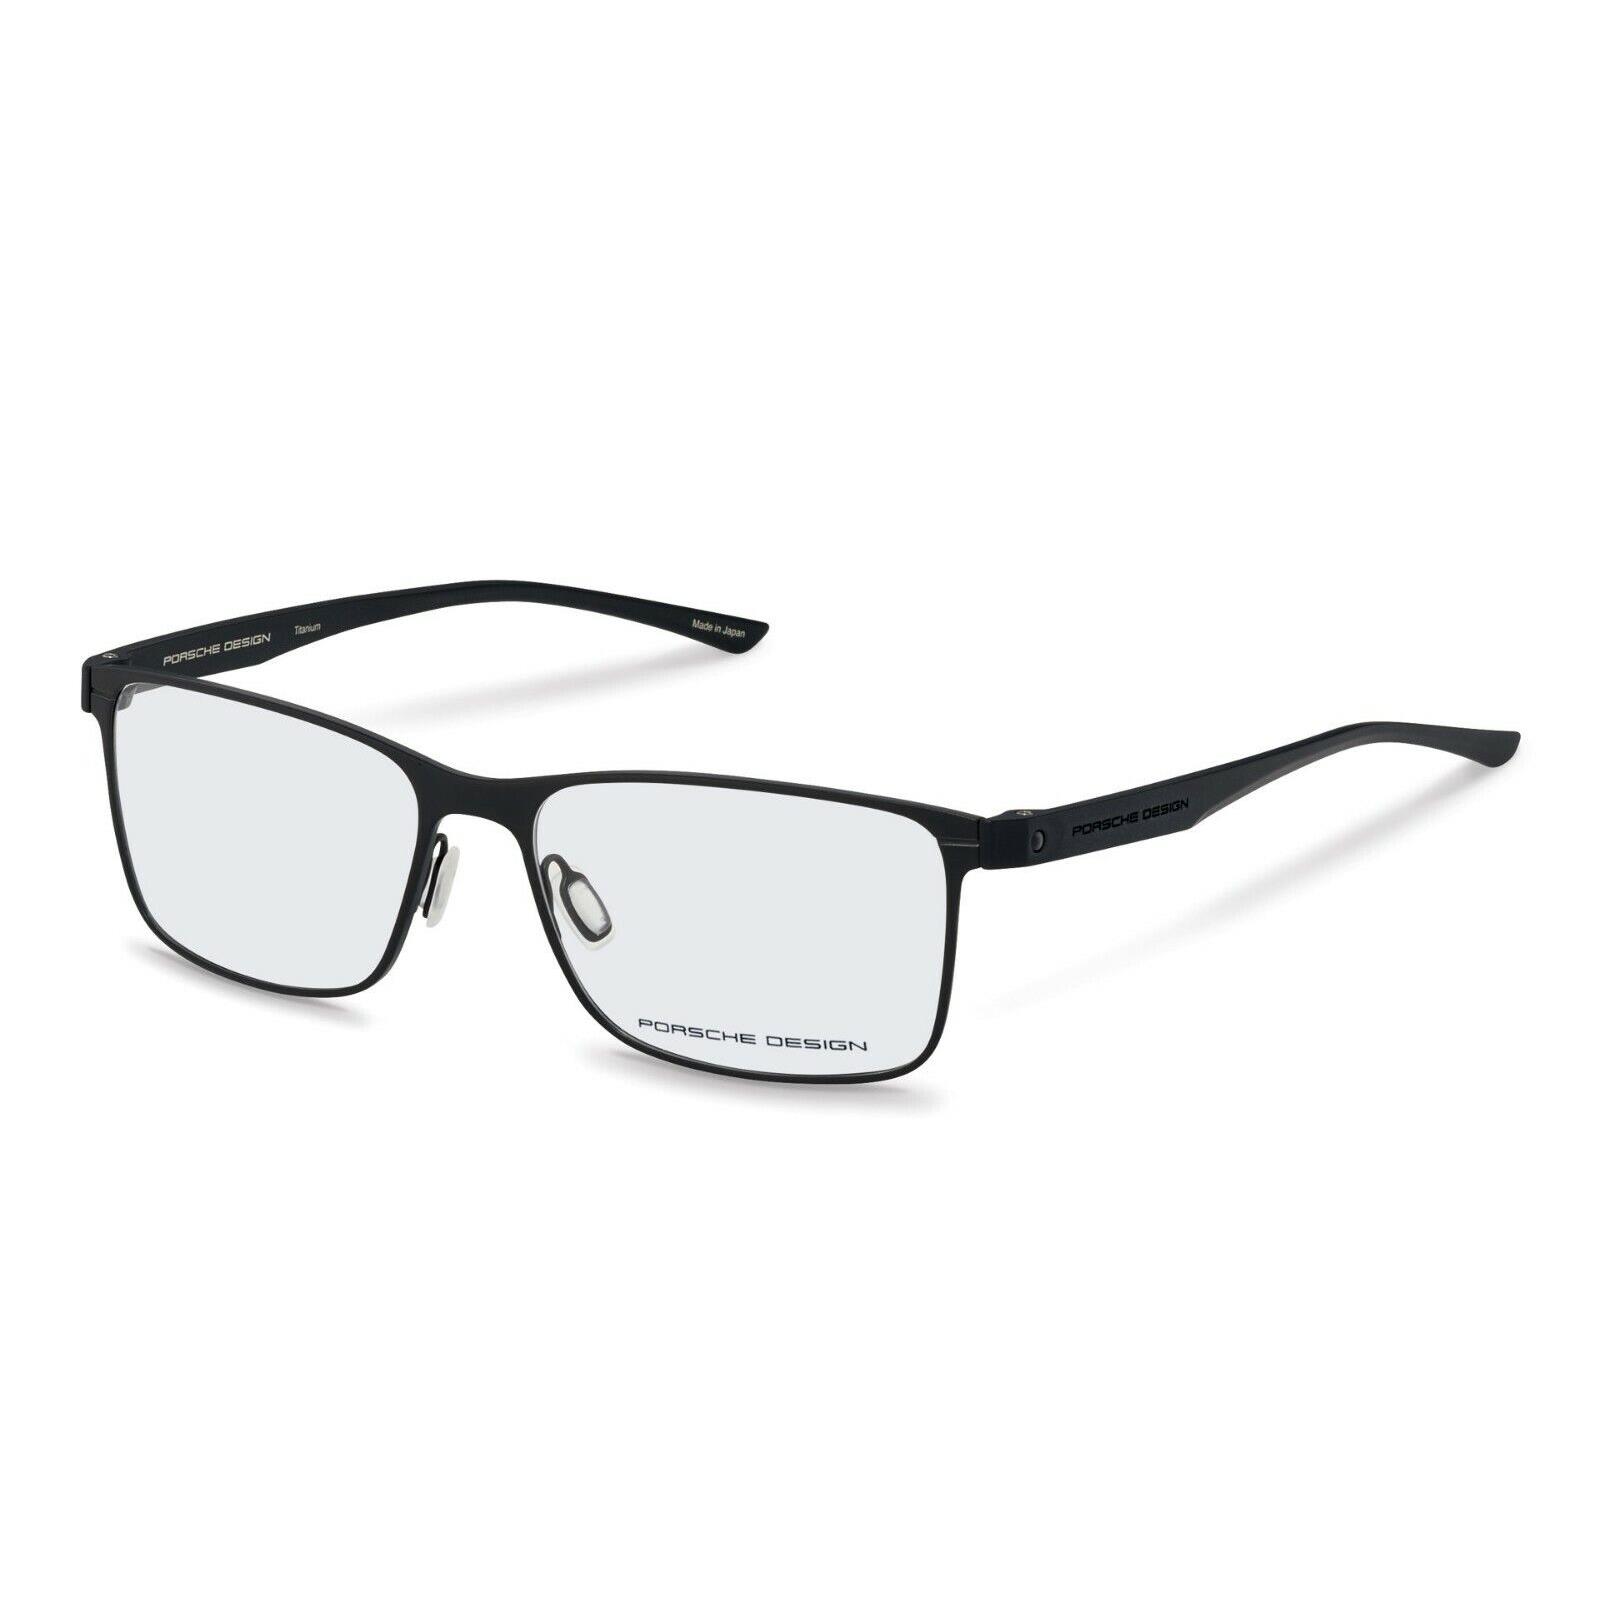 Porsche Design P 8346 A Black Eyeglasses